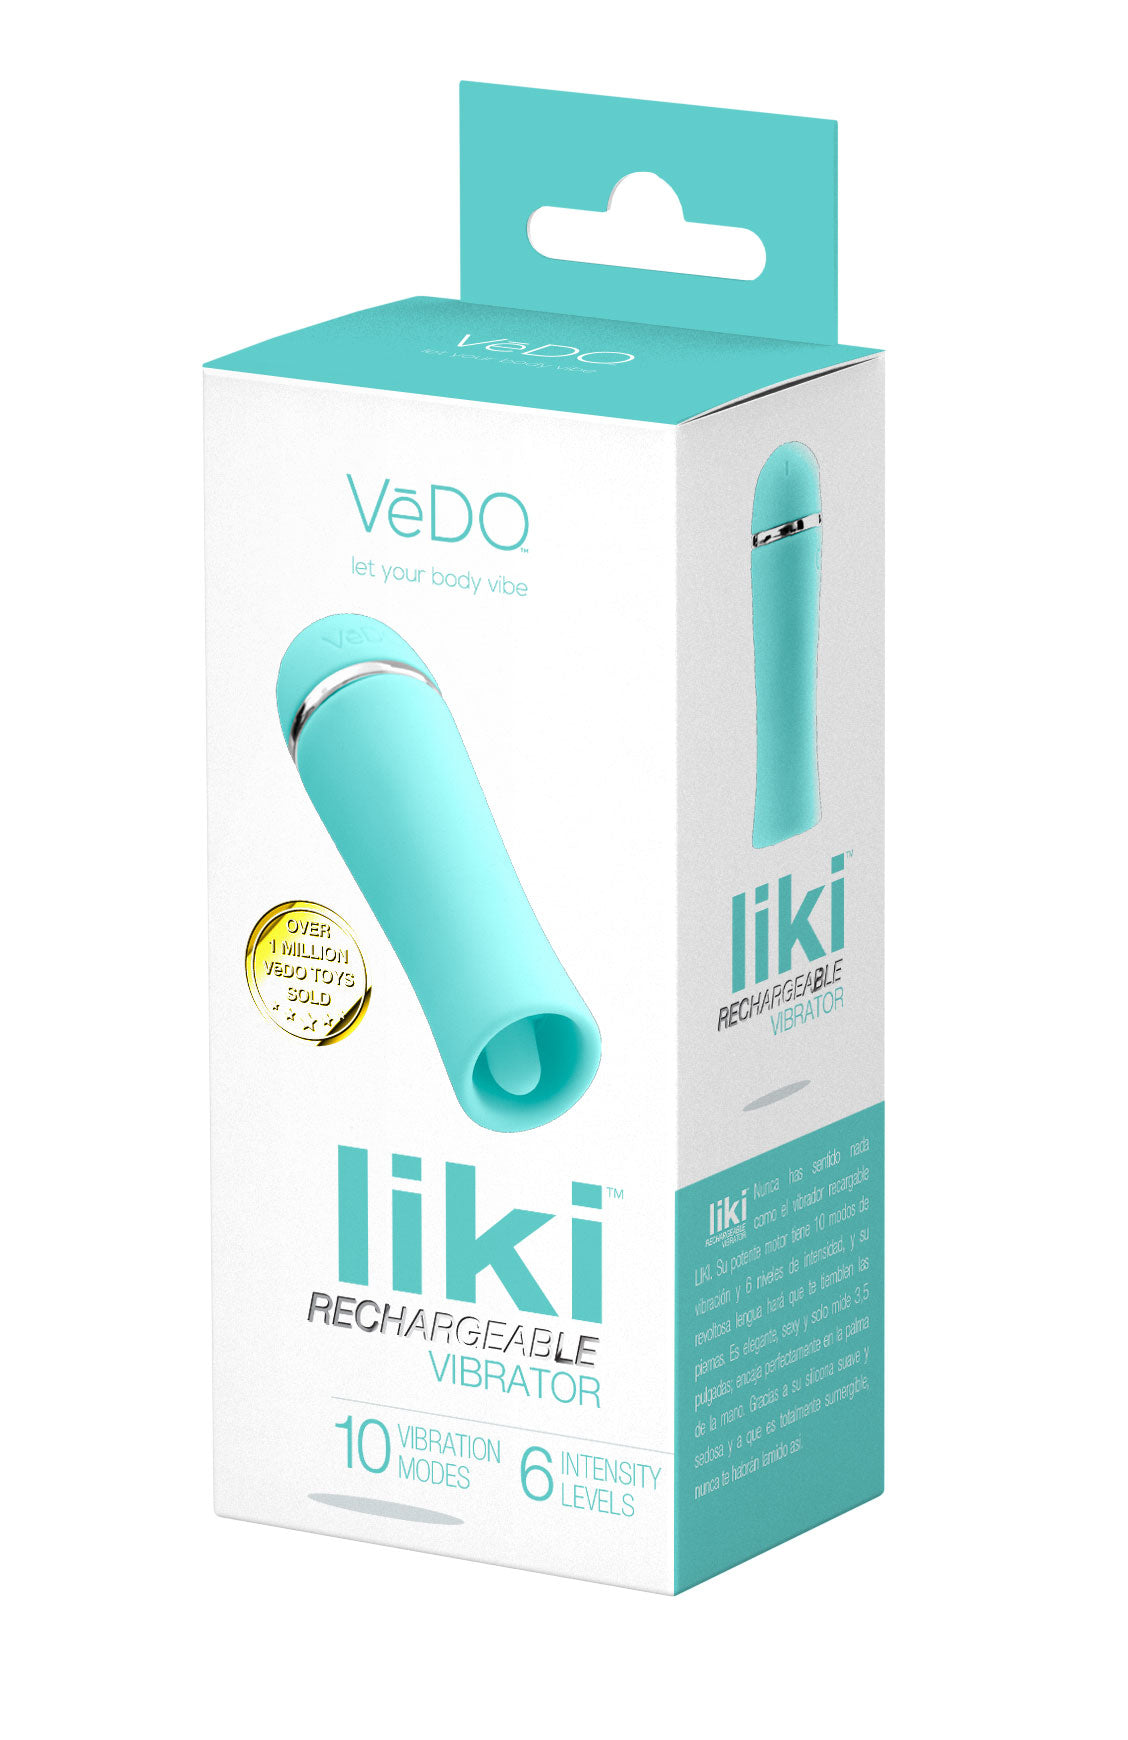 Liki Rechargeable Flicker Vibe - Tease Me Turqoise VI-F1101